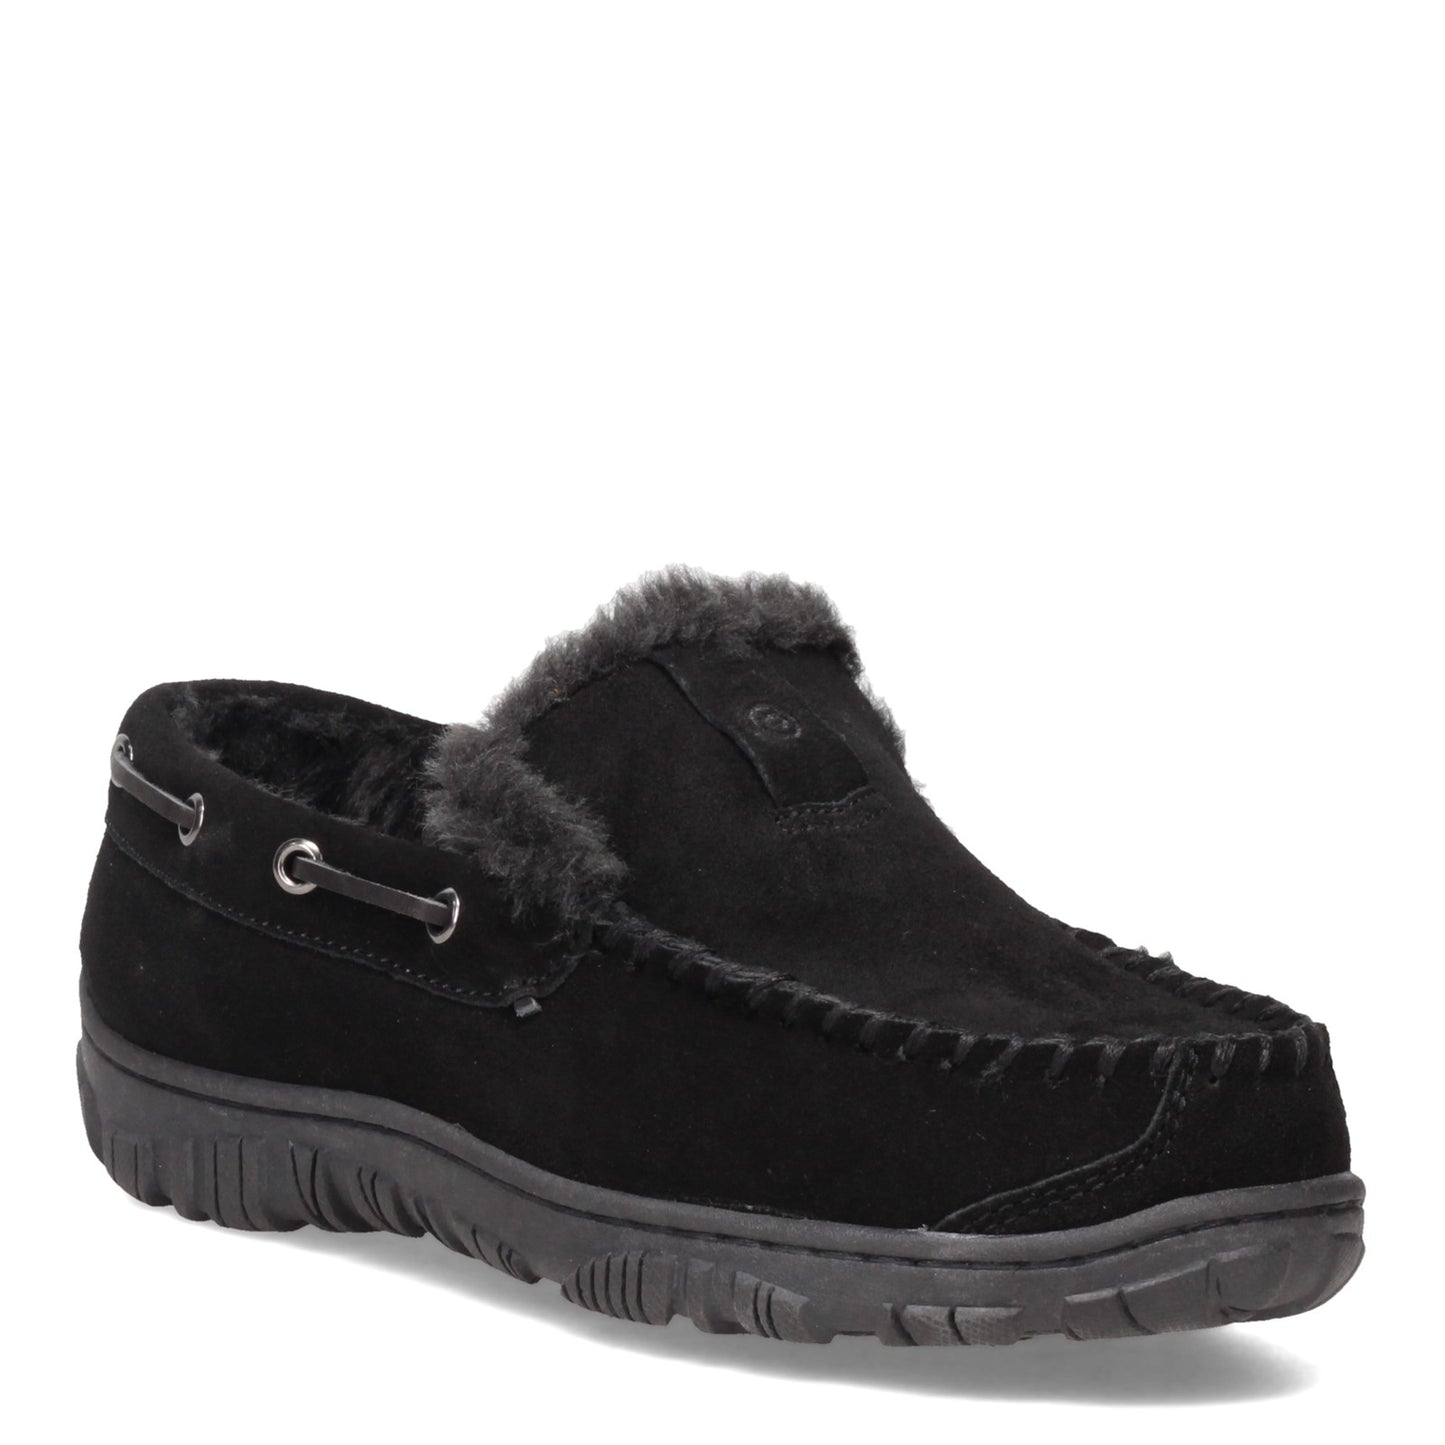 Peltz Shoes  Men's Clarks Venetian Moccasin Faux Fur Slipper BLACK JMH0674-201